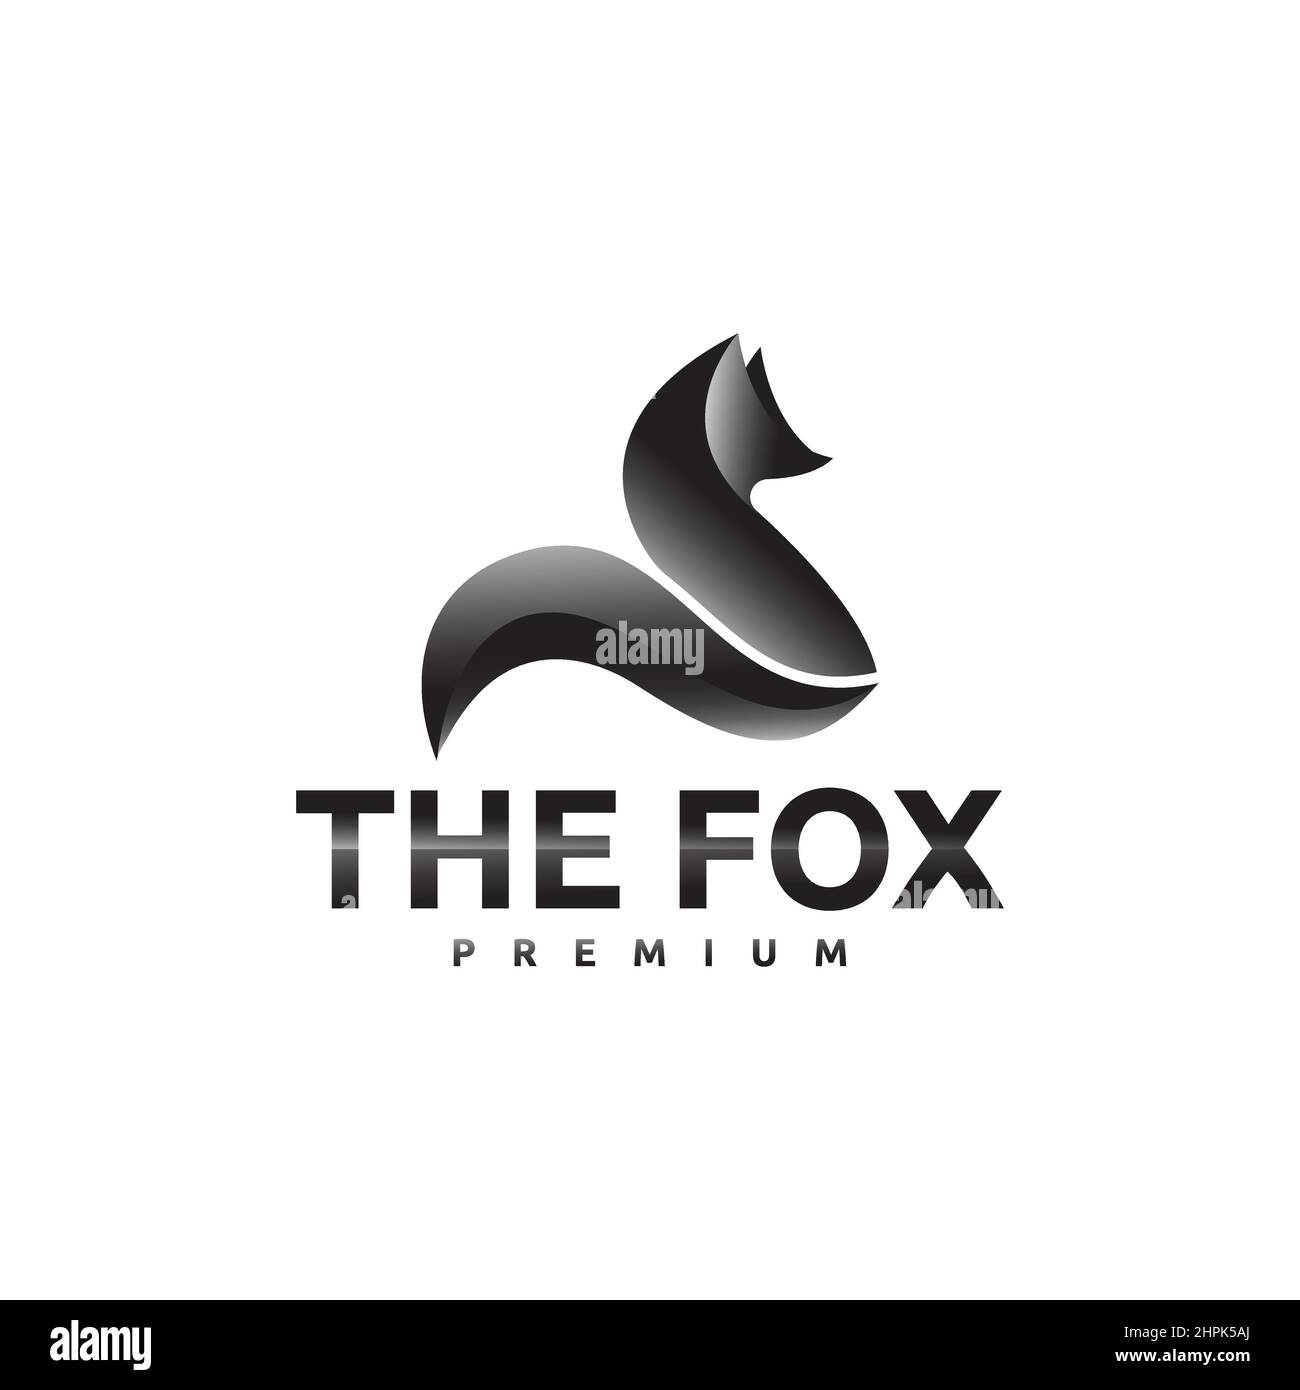 Premium icon fox illustration logo, symbol abstract design template Stock Vector